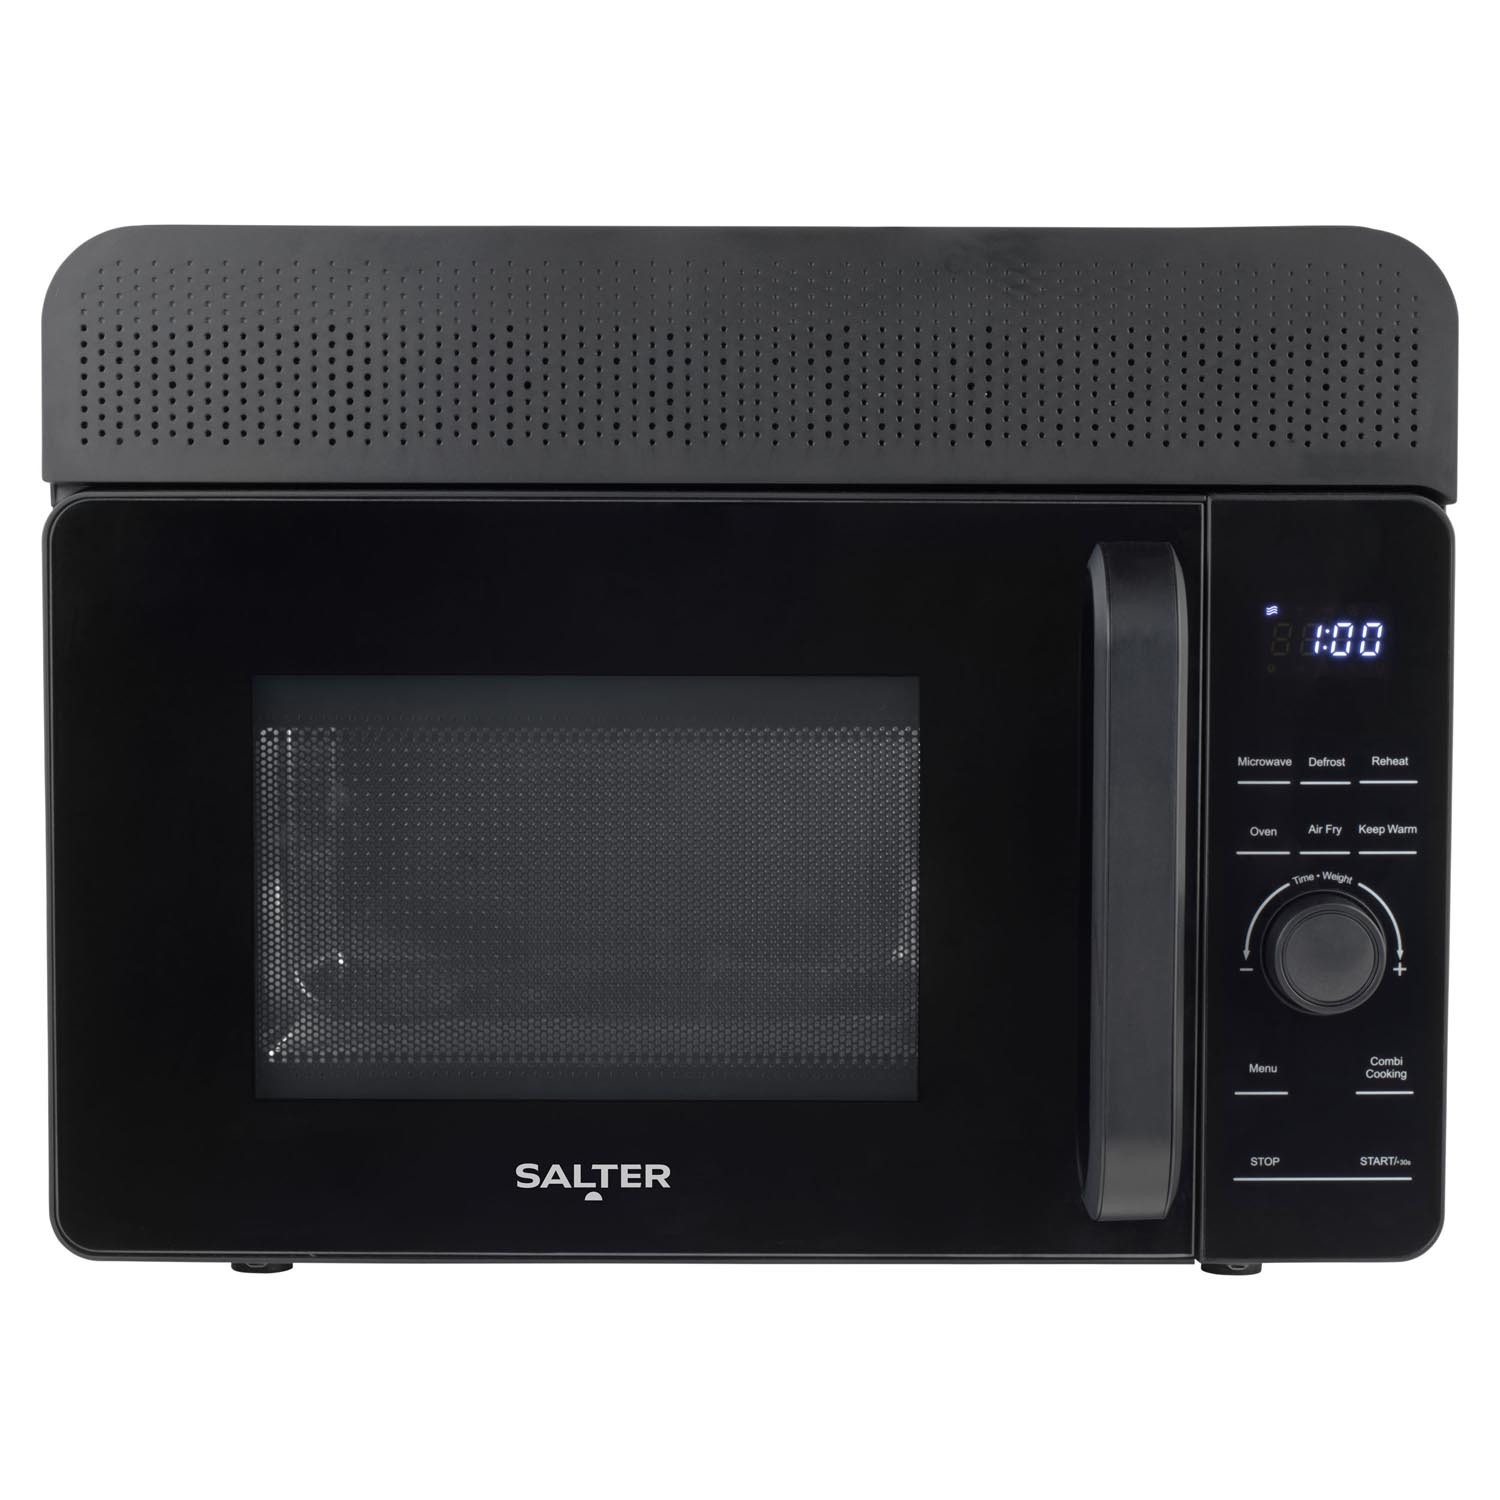 Salter 20L Air Fryer Microwave Oven - Black Image 1